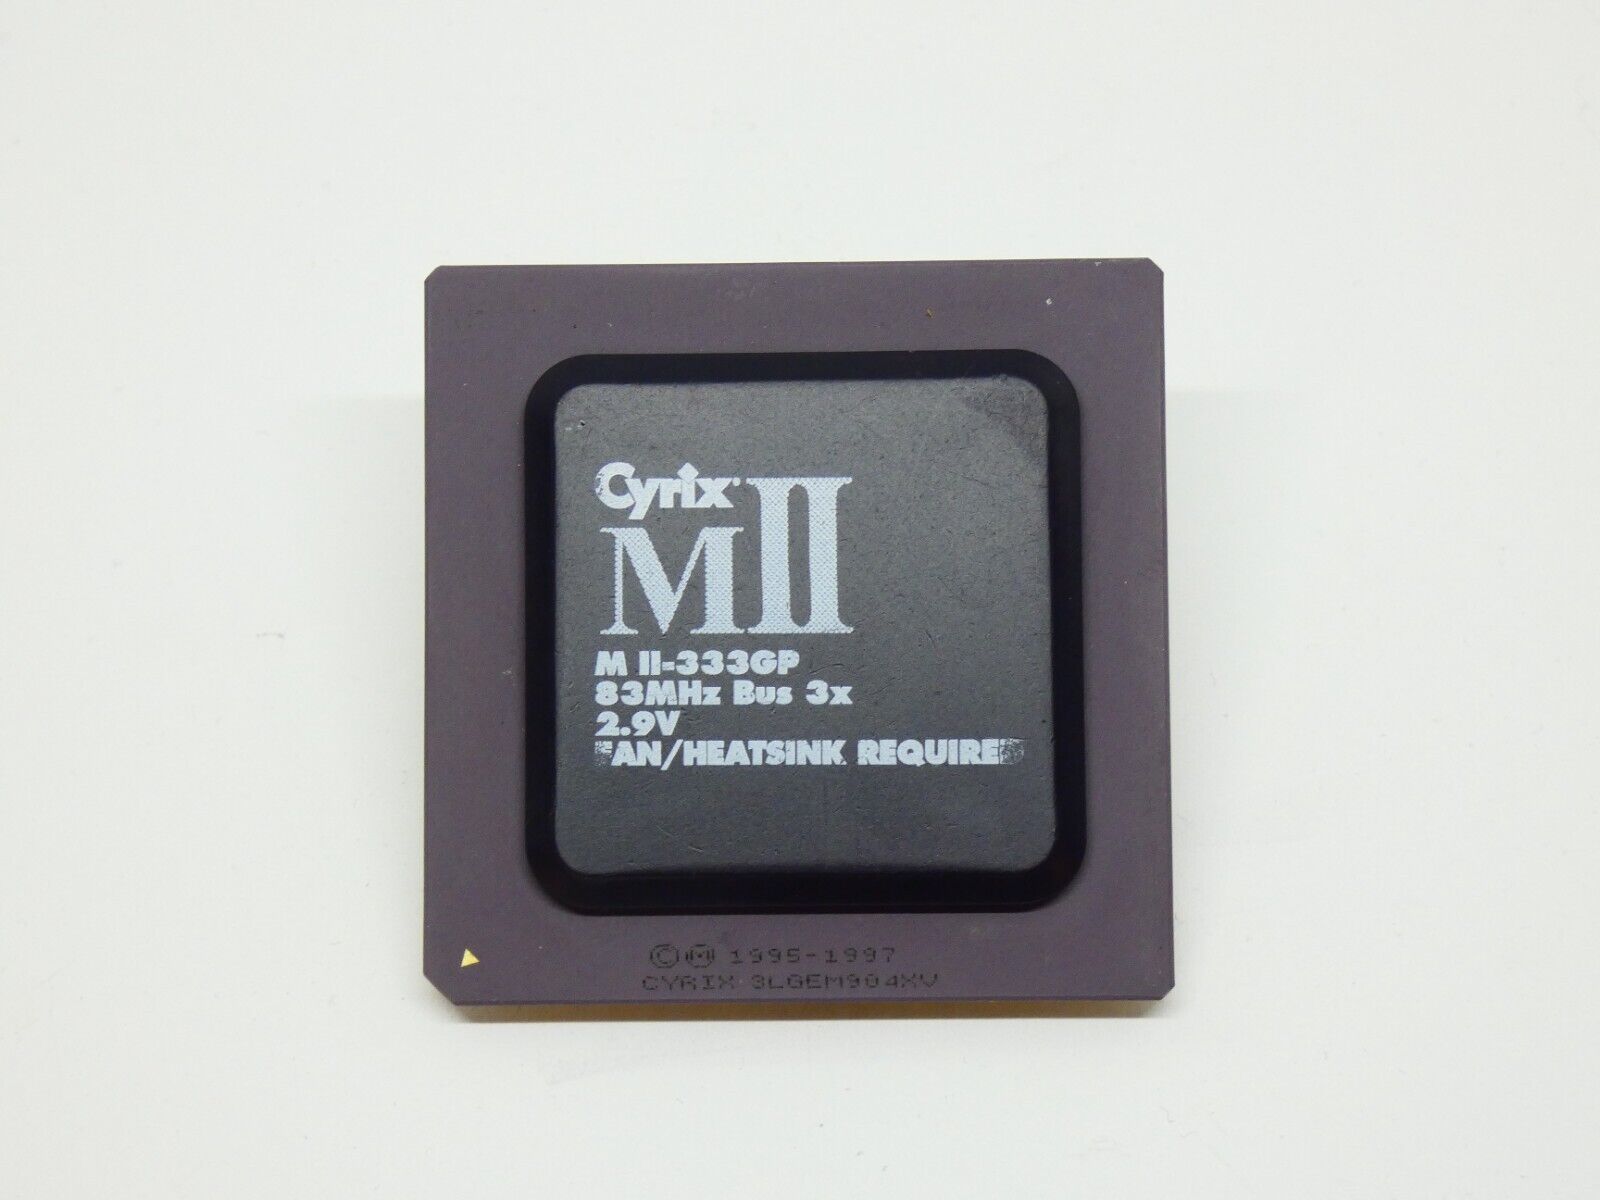 Cyrix MII-333GP 250 MHz (rated 333MHz, 83 MHz Bus, 2.9V) - Socket 7